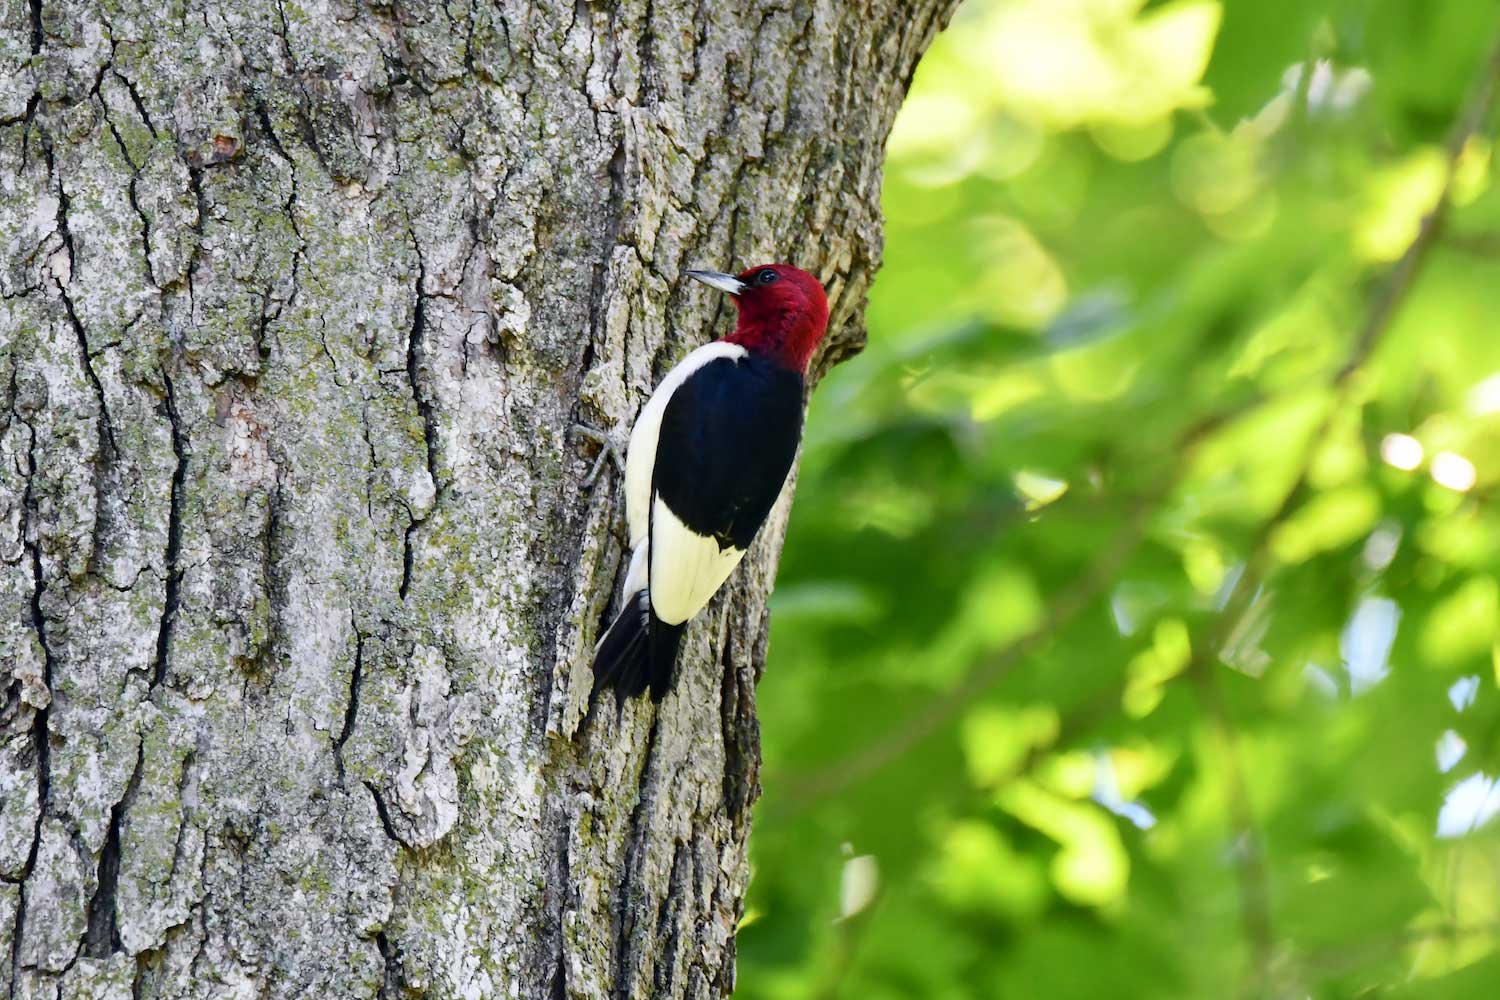 A red-headed woodpecker on a tree trunk.